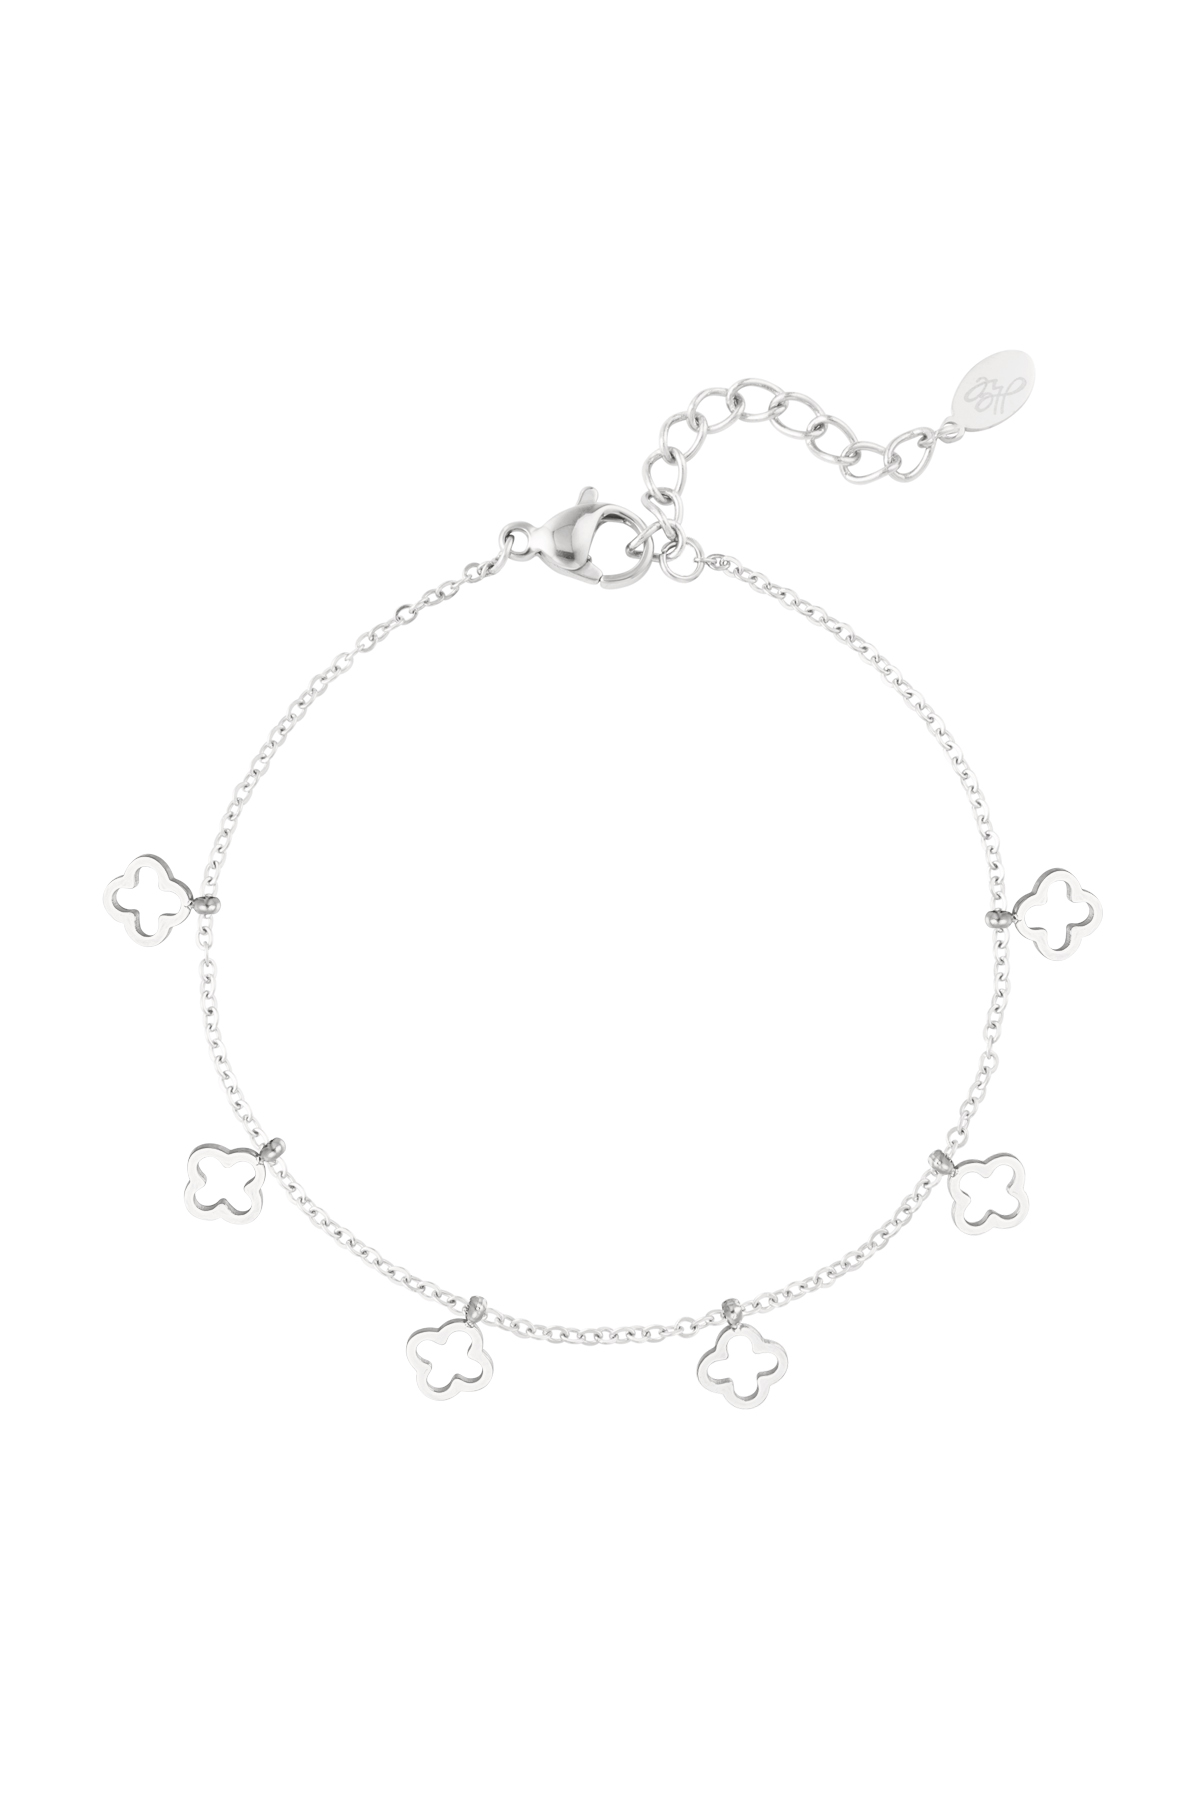 Bracelet 6 clovers - silver